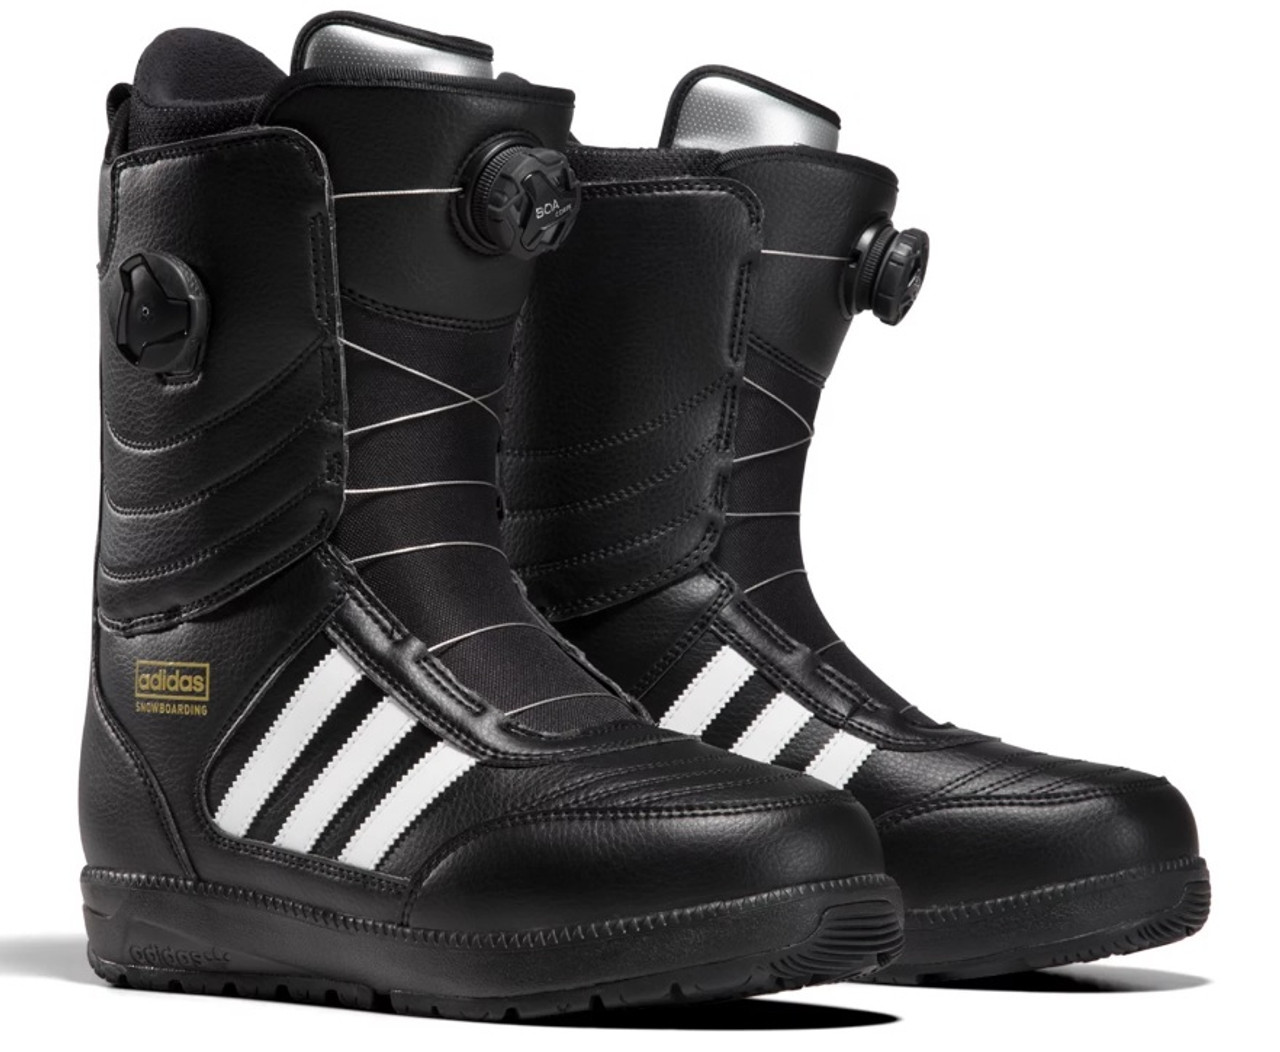 Adidas Response Adv Snowboard Boots 